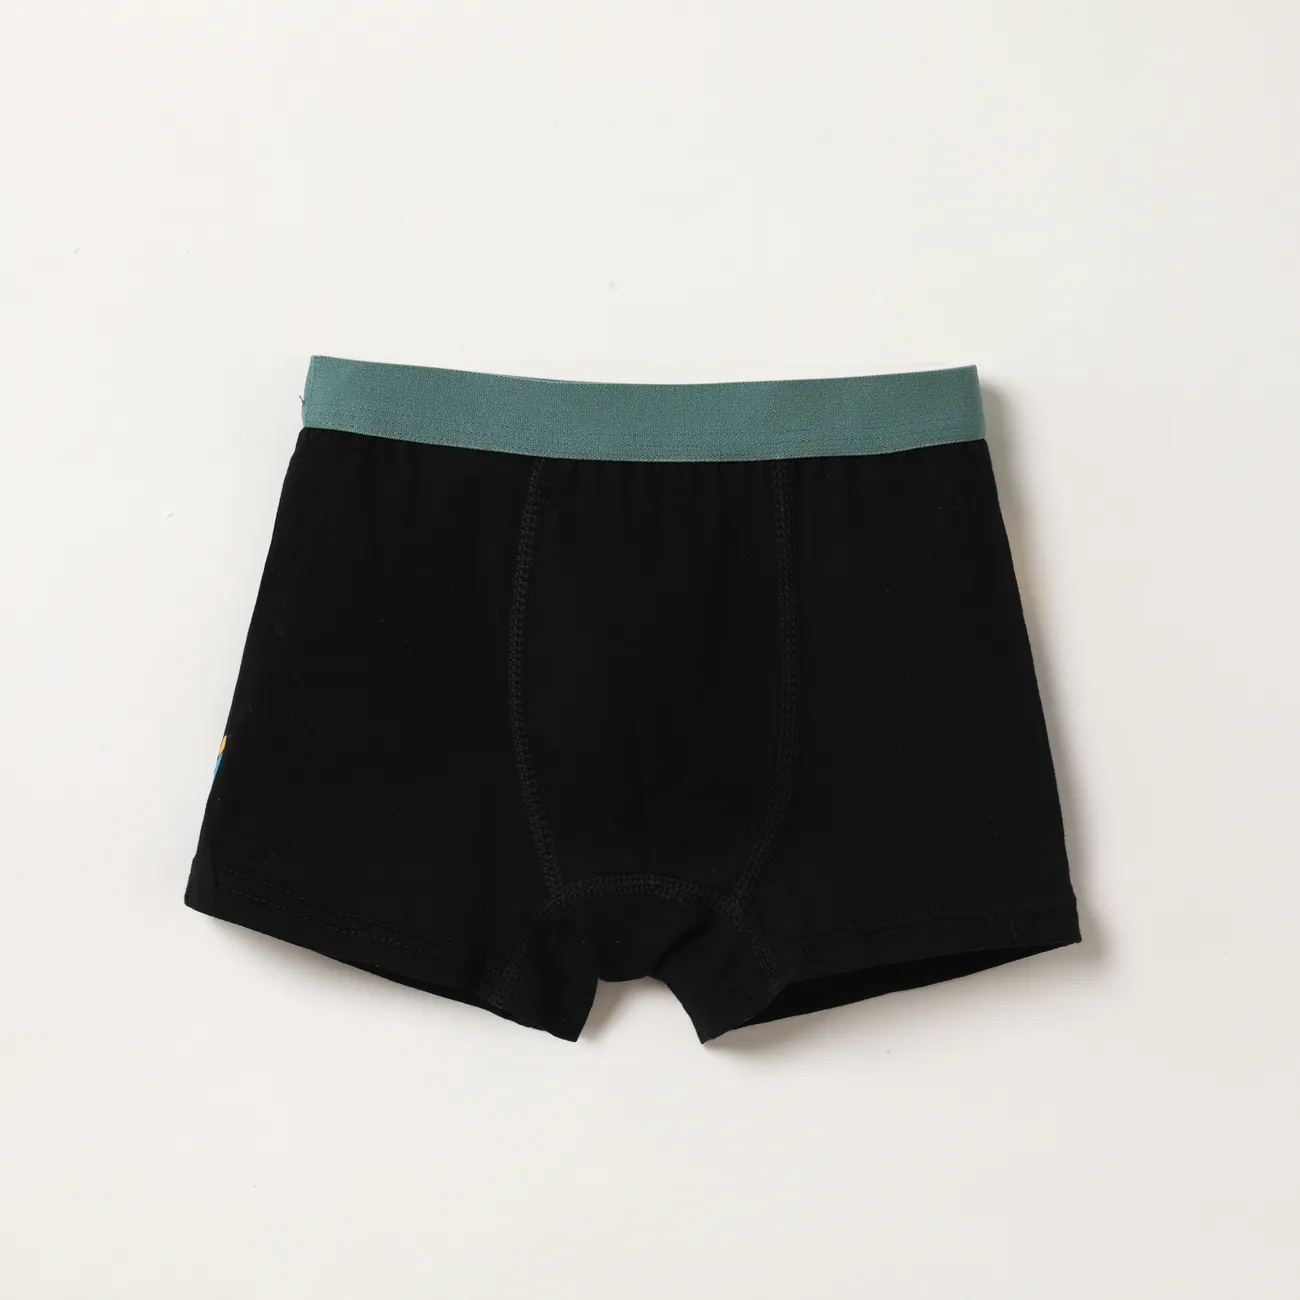 Dinosaur Toddler/Kid Boys' Underwear Cotton Shorts  Black big image 1